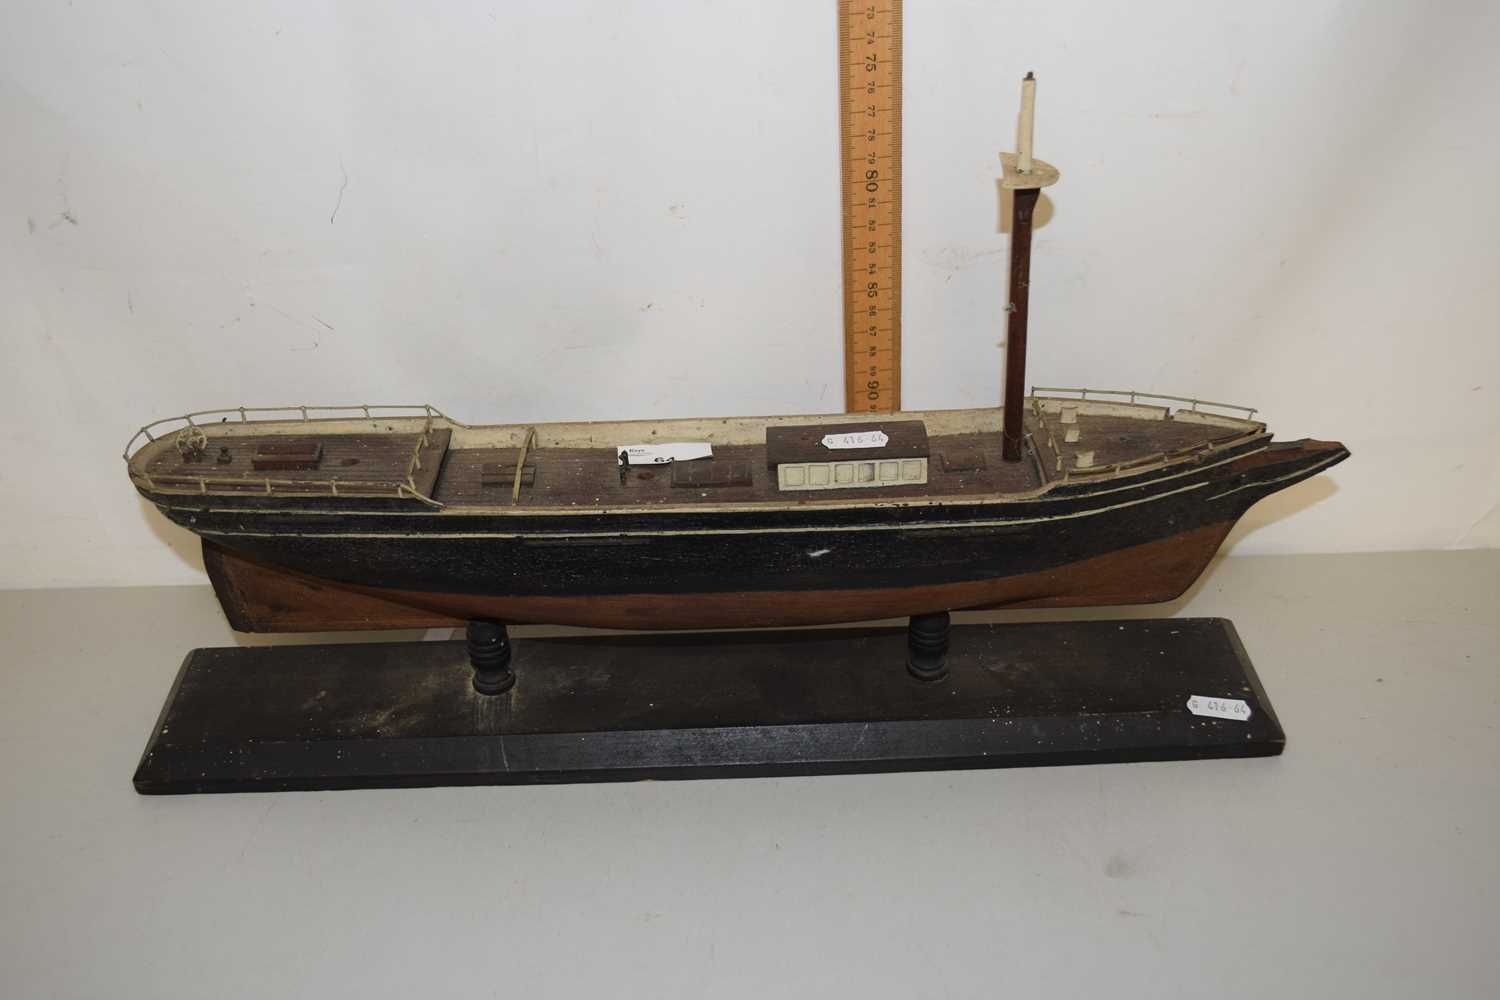 Lot 64 - A wooden model of a boat